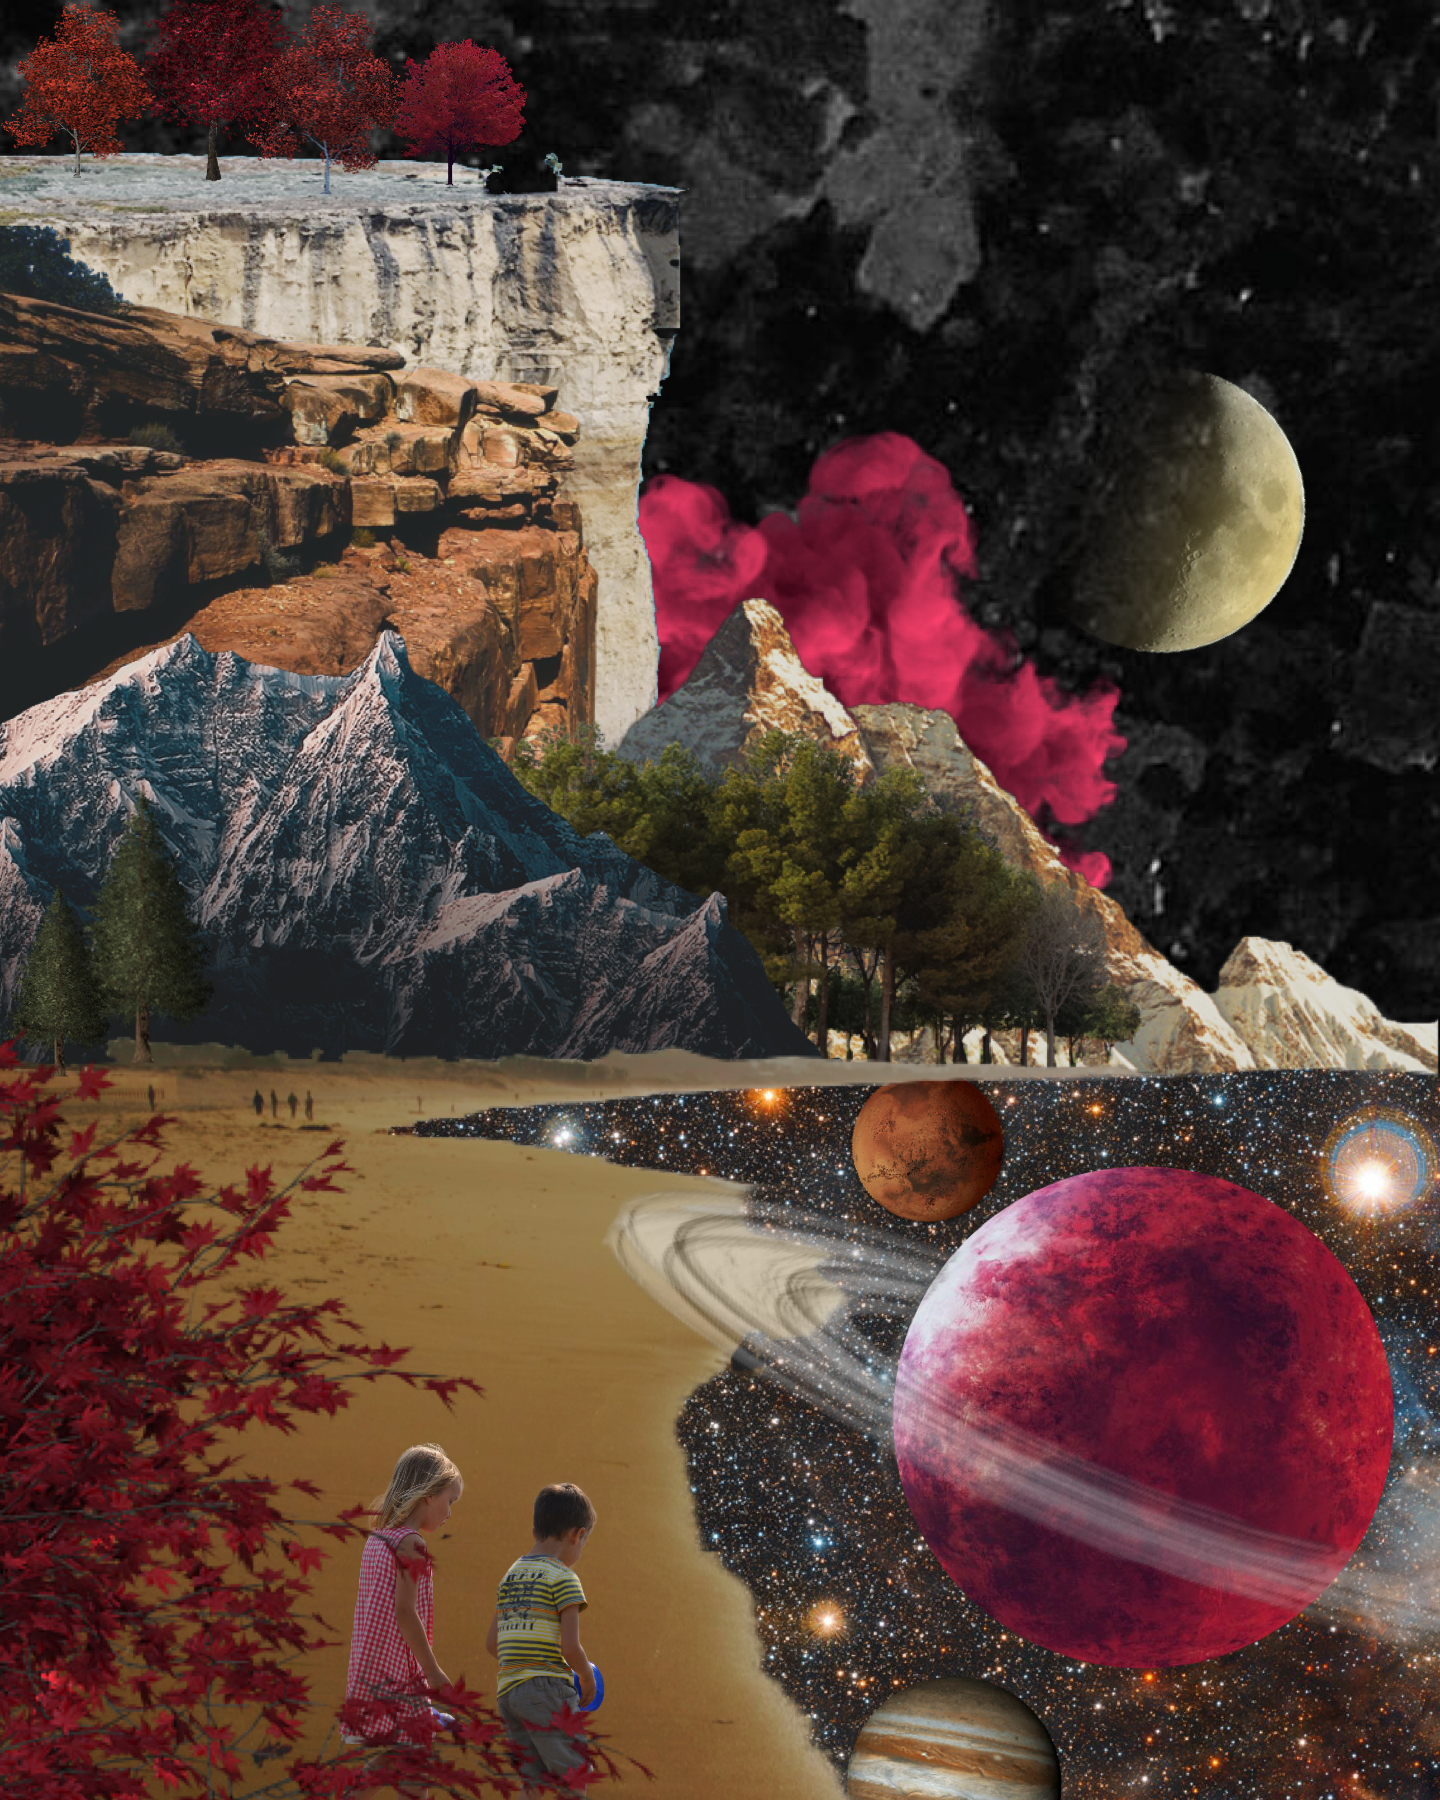 Collage by Solkar